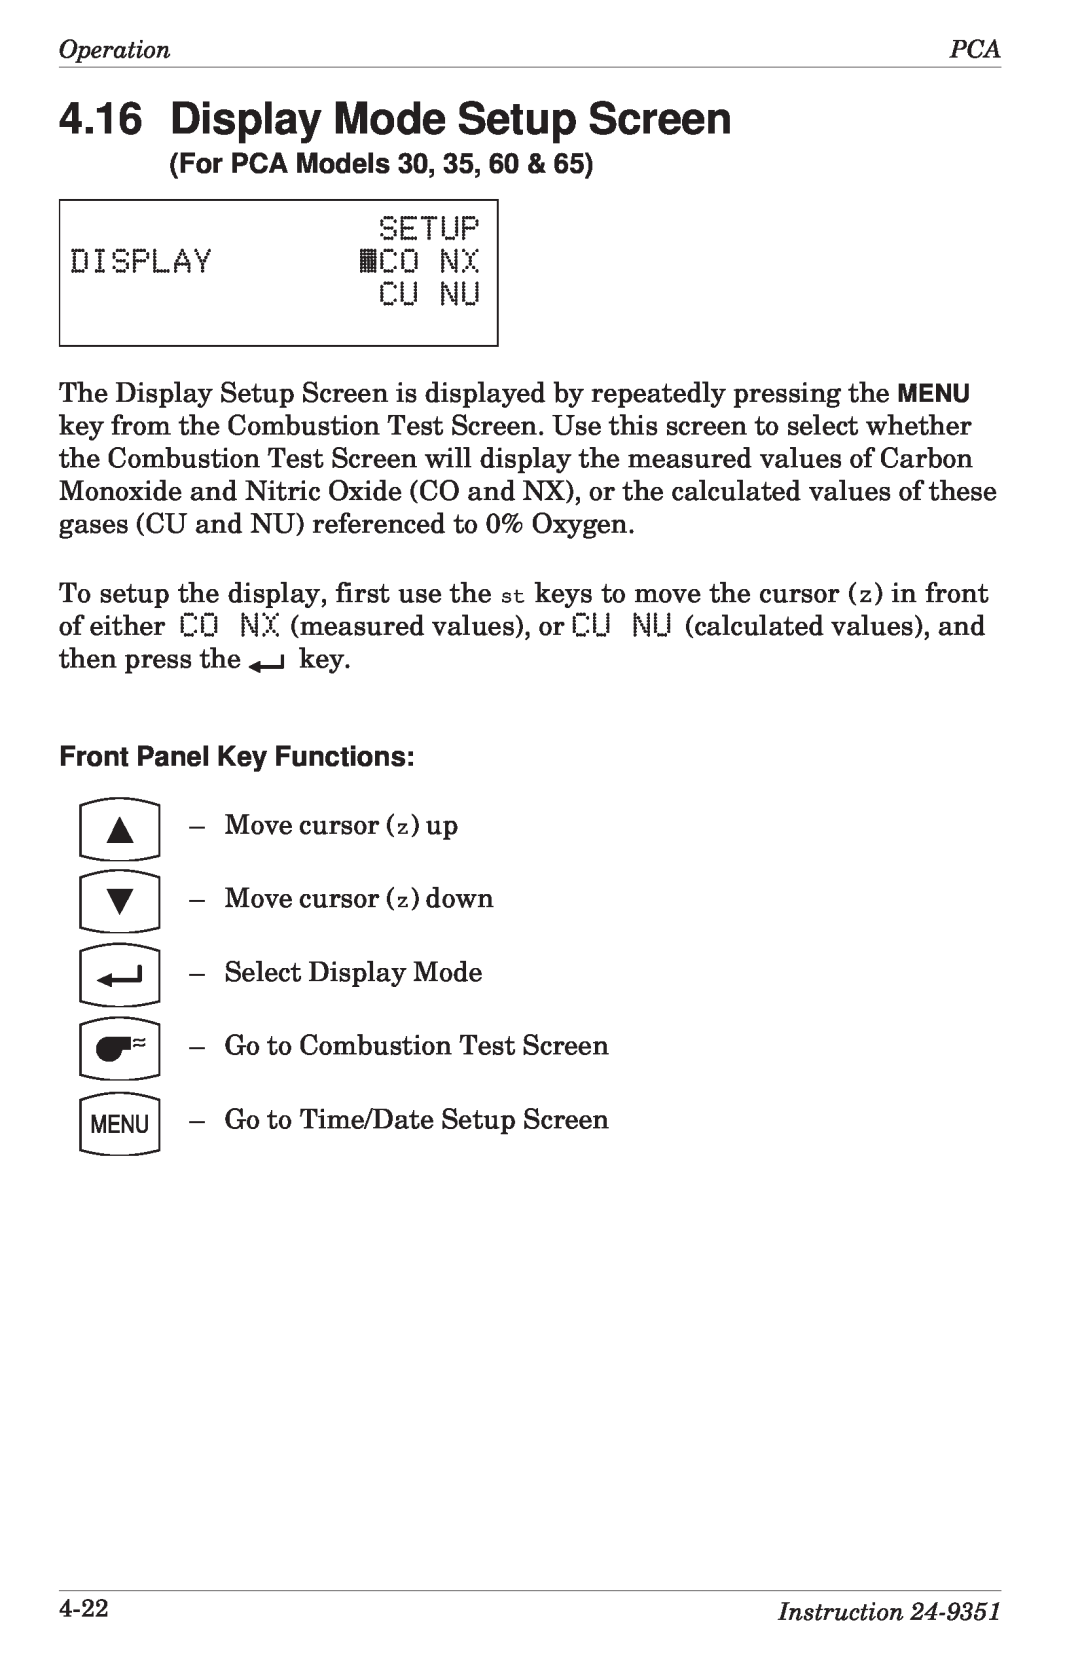 Bacharach 24-9351 manual Display Mode Setup Screen, For PCA Models 30, 35, 60, Setup Display «Co Nx Cu Nu 